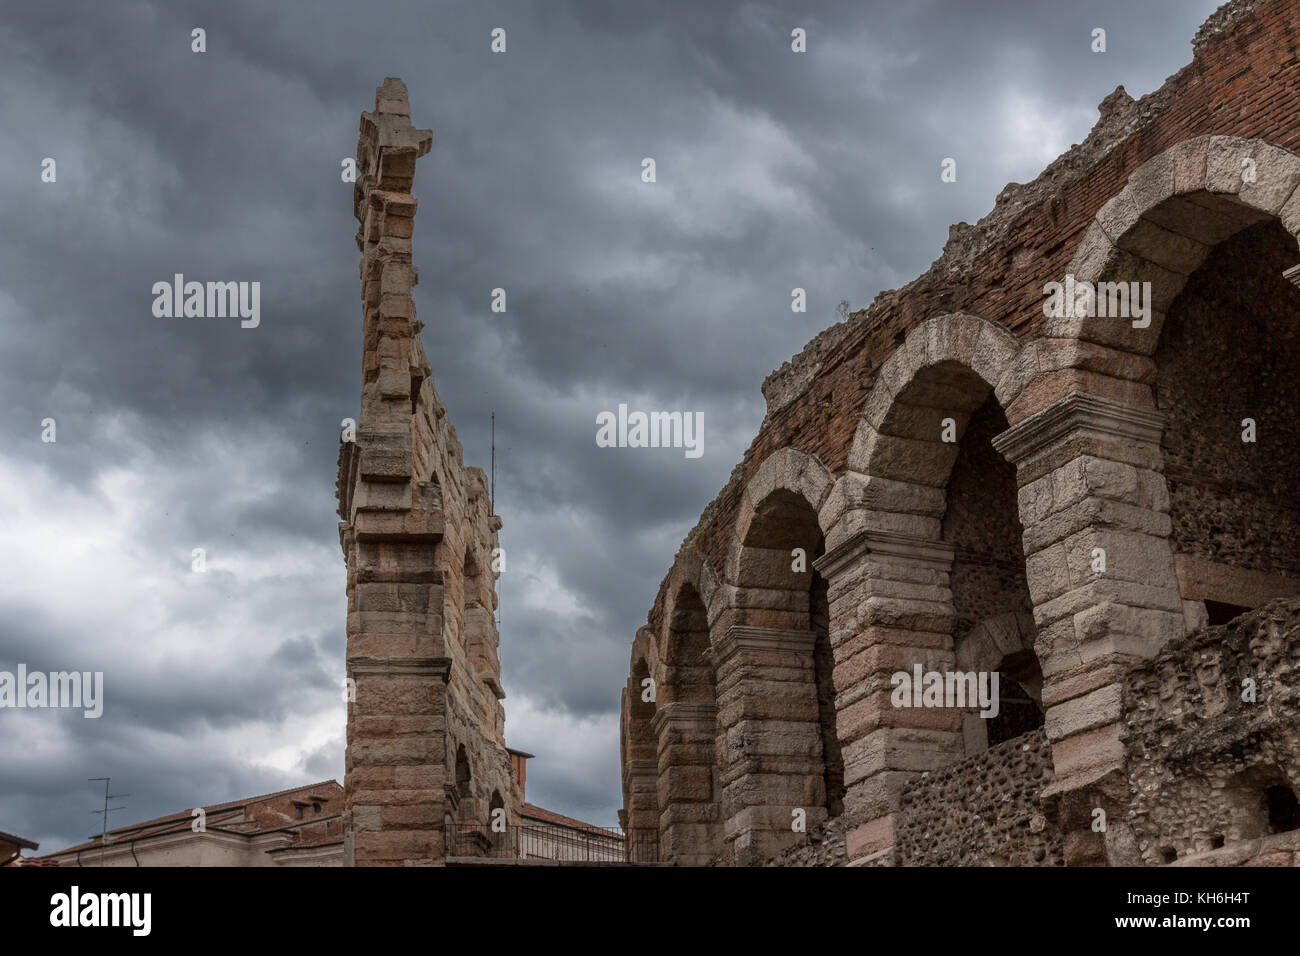 The arena of Verona in Piazza bra, Italy. Stock Photo